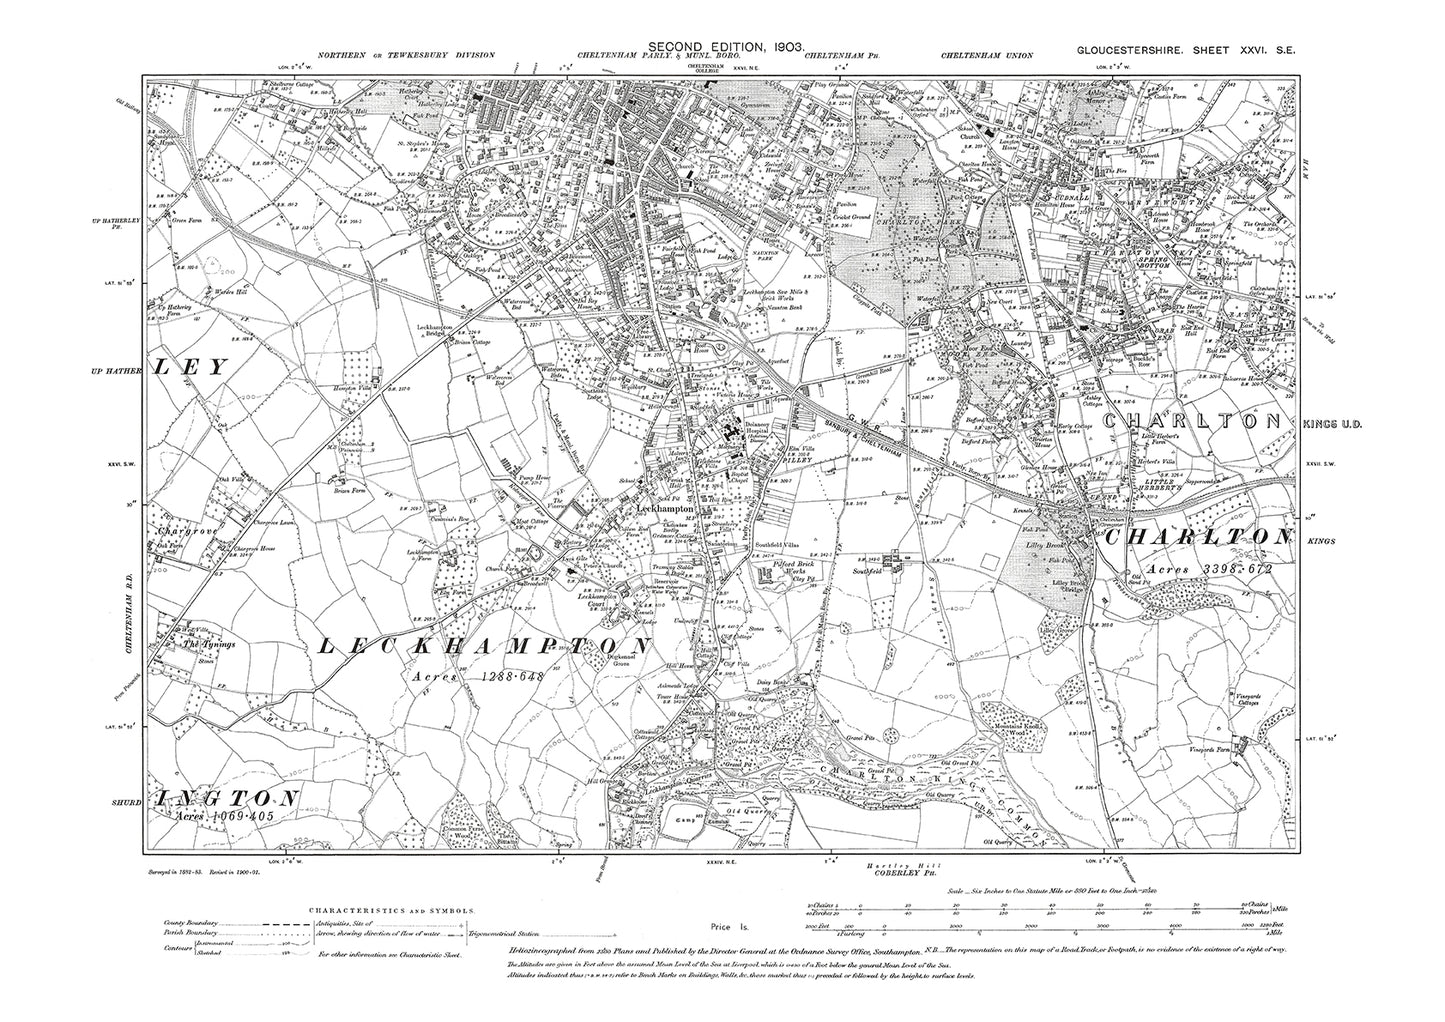 Old OS map dated 1903, showing Cheltenham (south), Charlton Kings, Leekhampton in Gloucestershire - 26SE